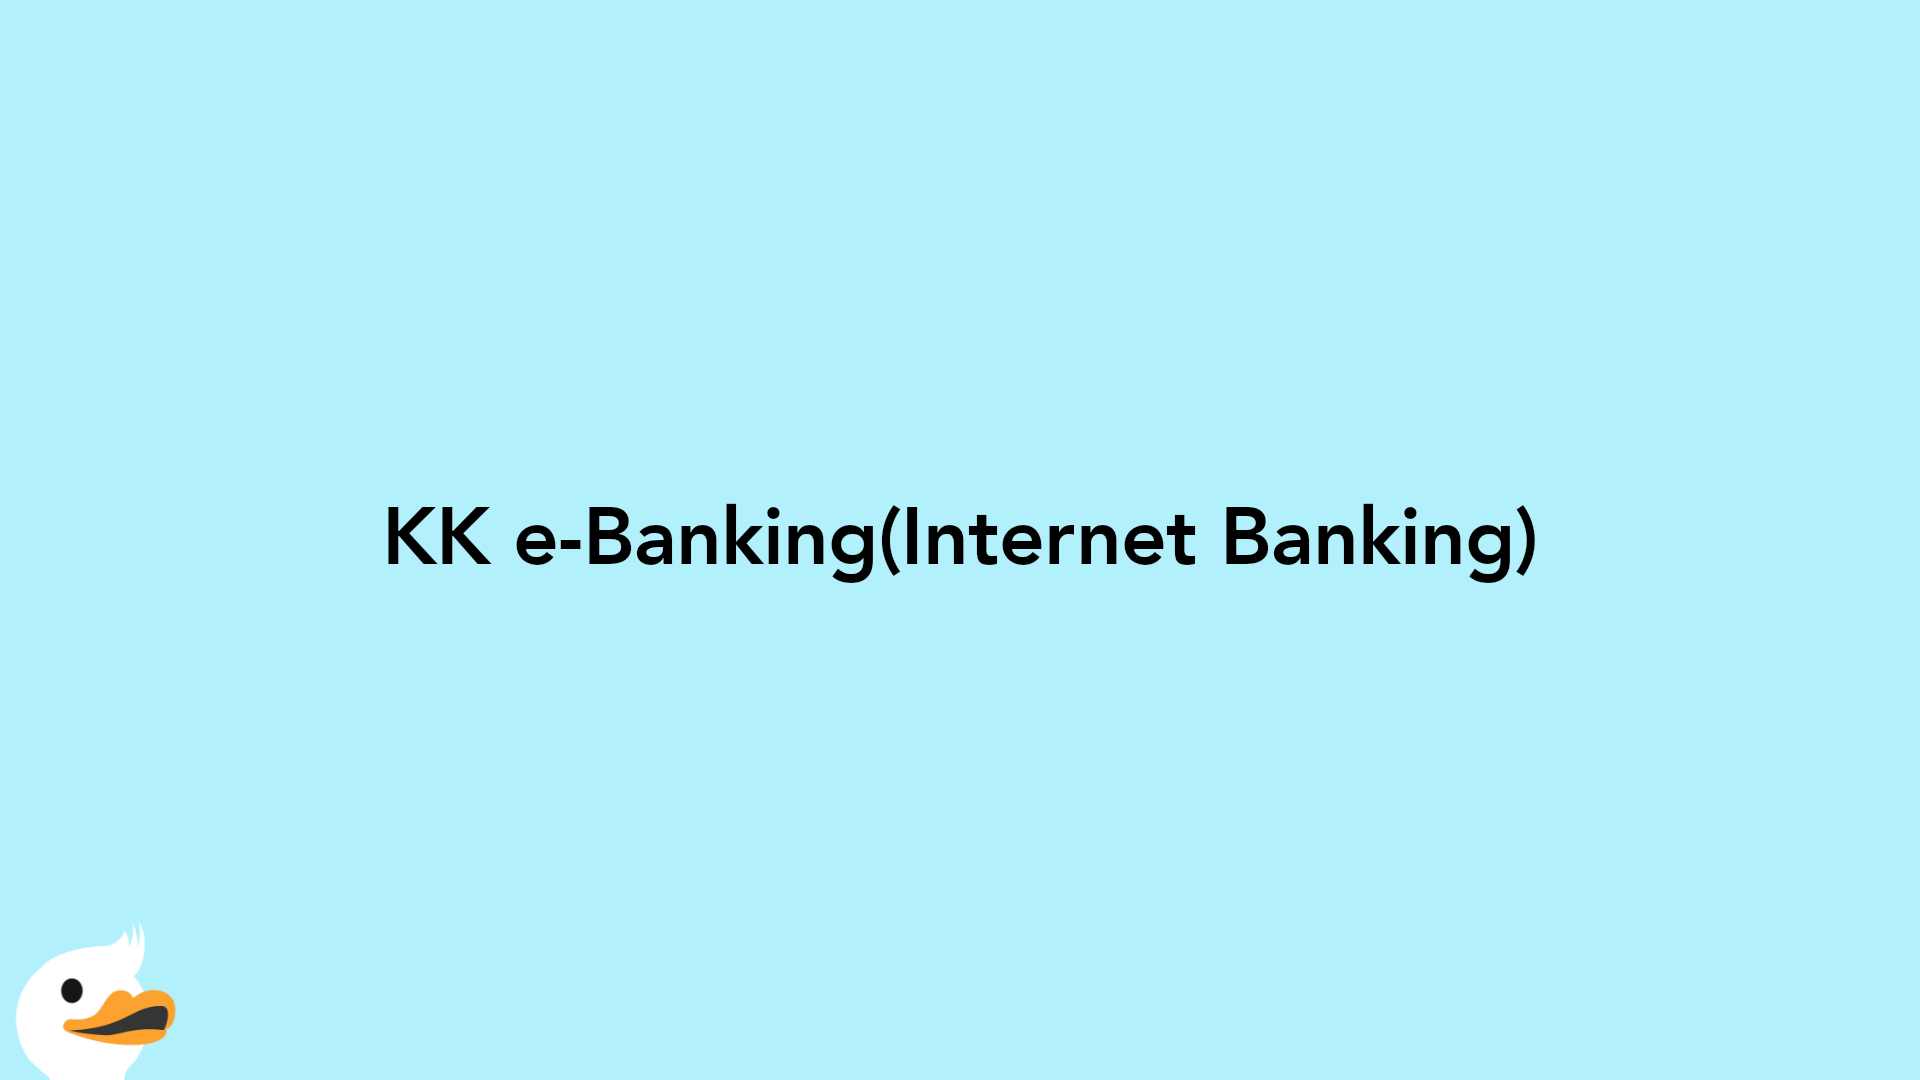 KK e-Banking(Internet Banking)